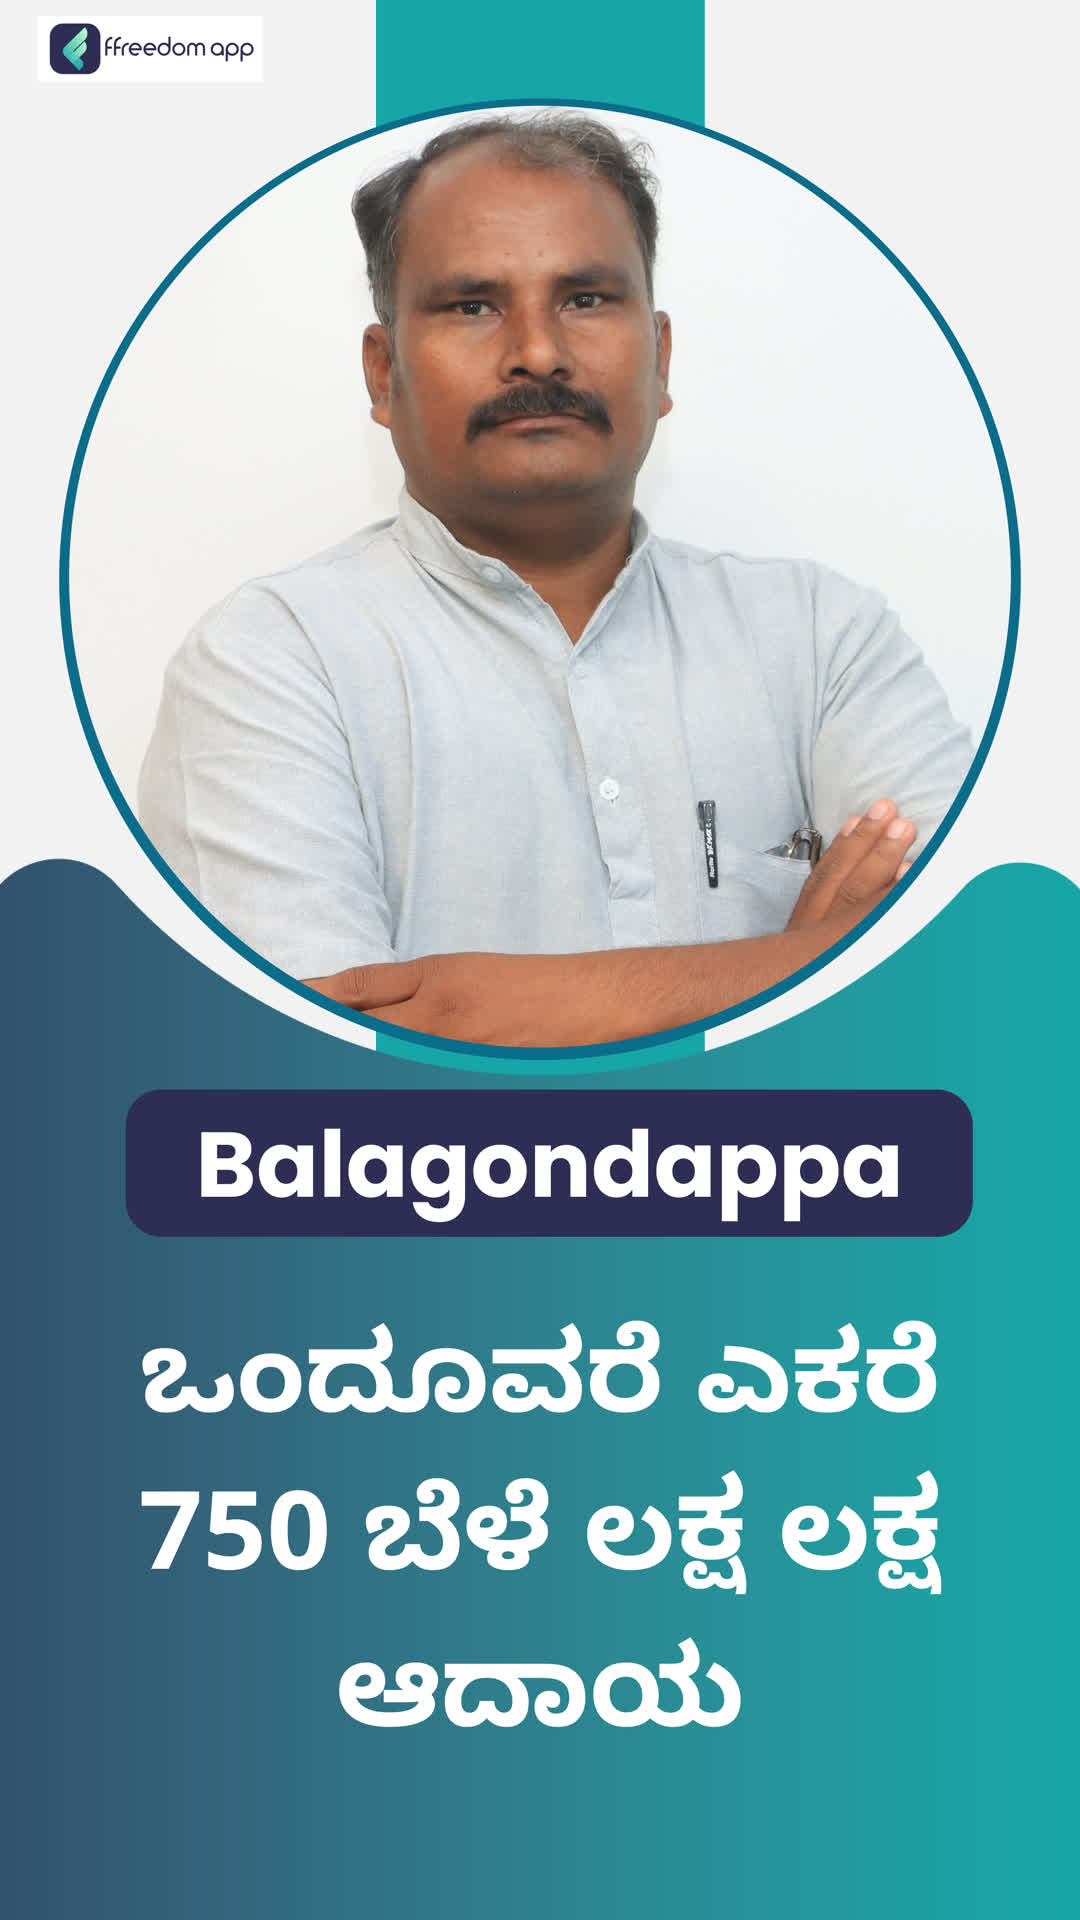 Balagondappa M Jevoor's Honest Review of ffreedom app - Vijayapura ,Karnataka